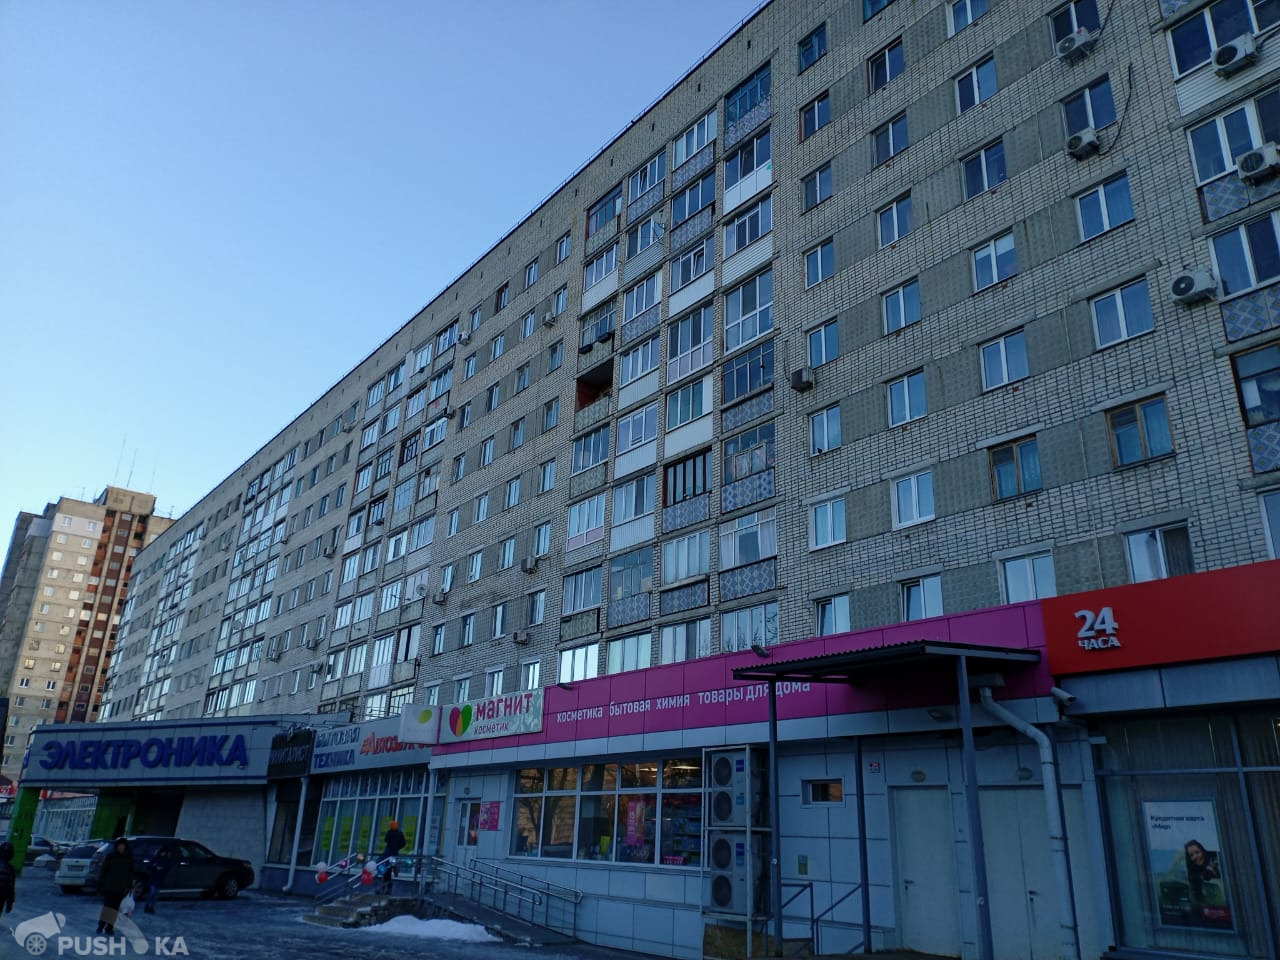 Продаётся 2-комнатная квартира 47.0 кв.м. этаж 8/9 за 2 700 000 руб 